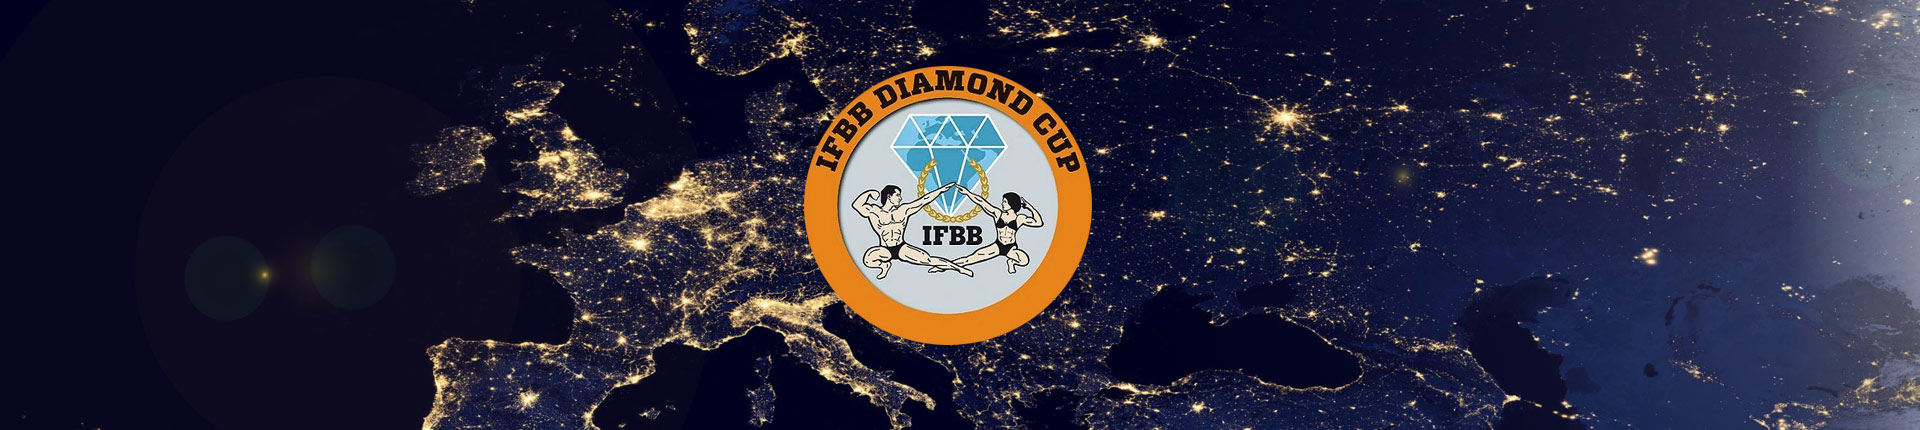 Diamond Cup Warsaw Fiwe 2018